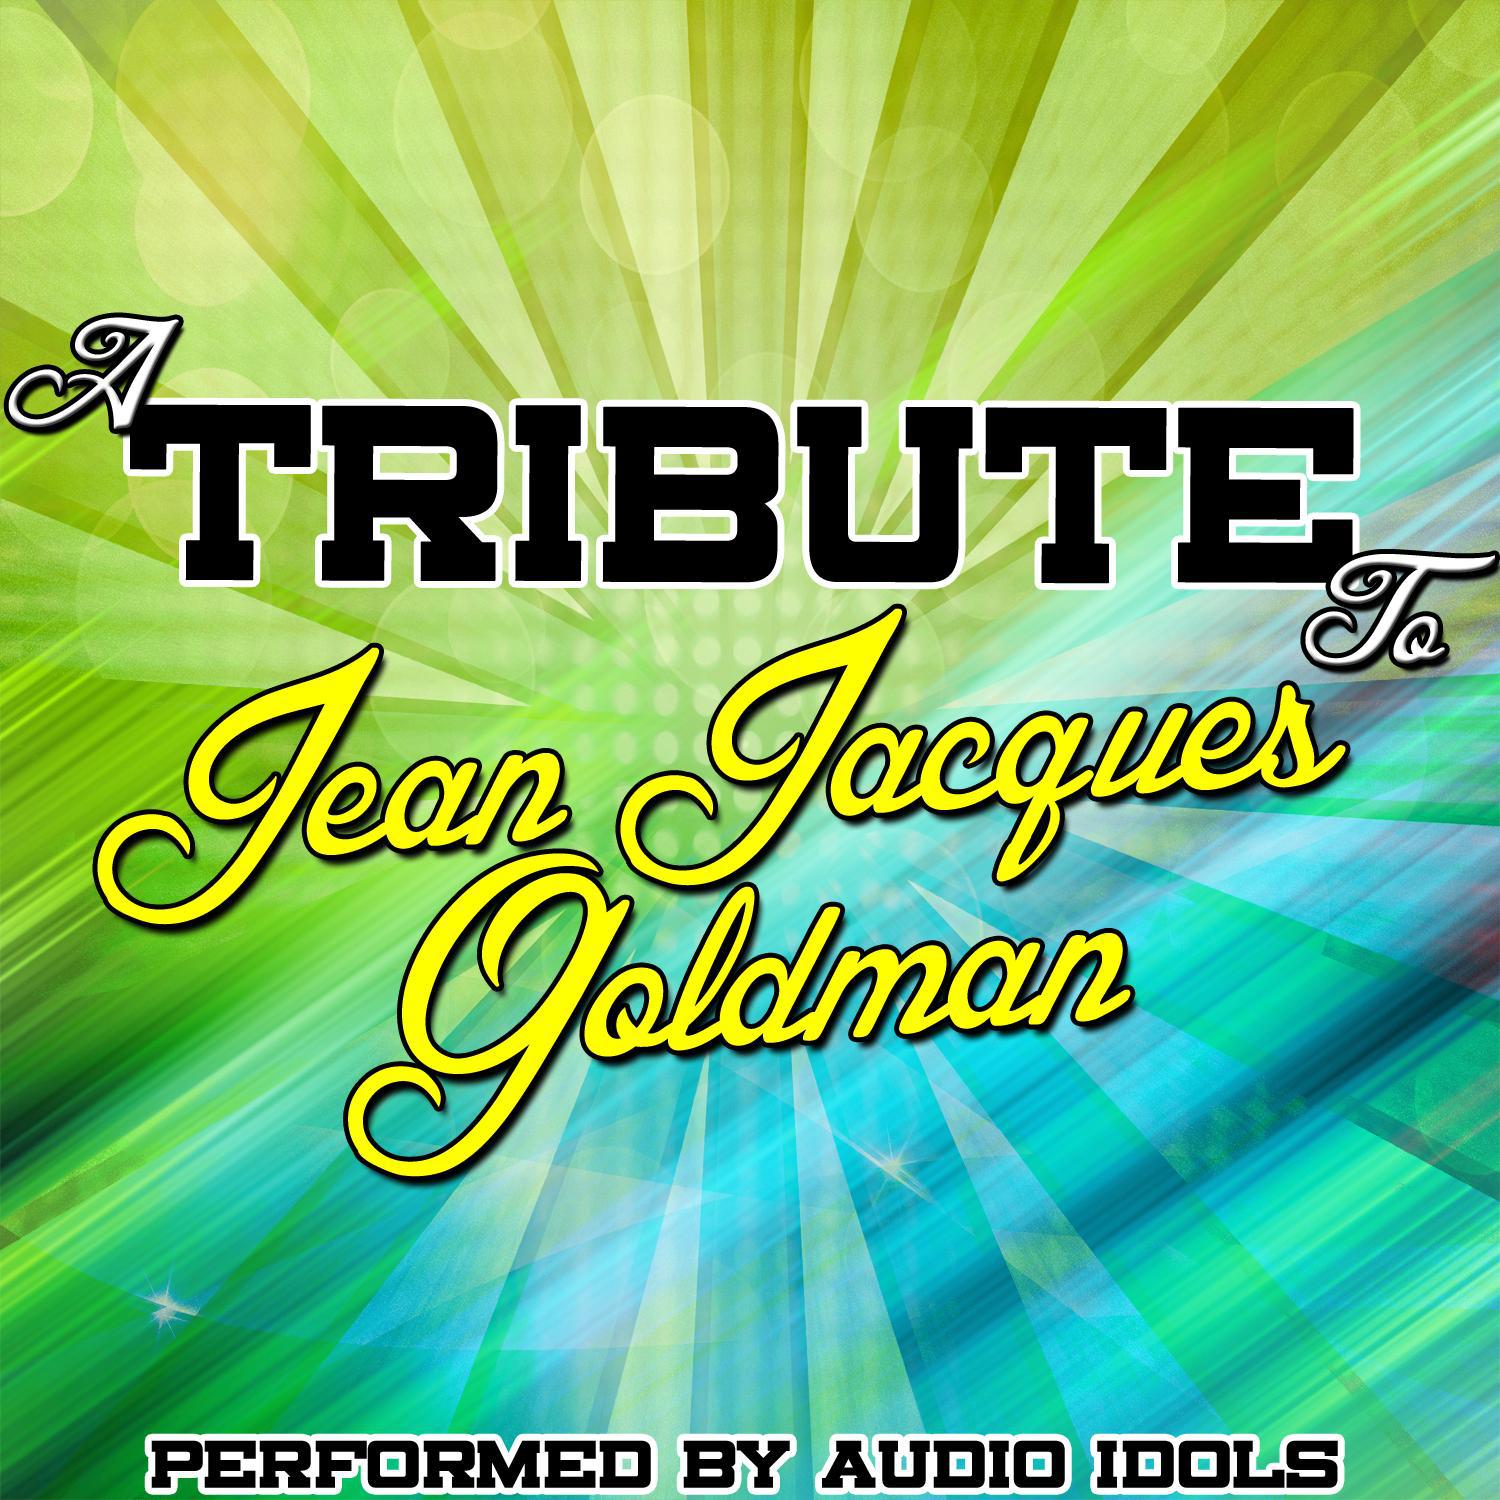 A Tribute to Jean-Jacques Goldman